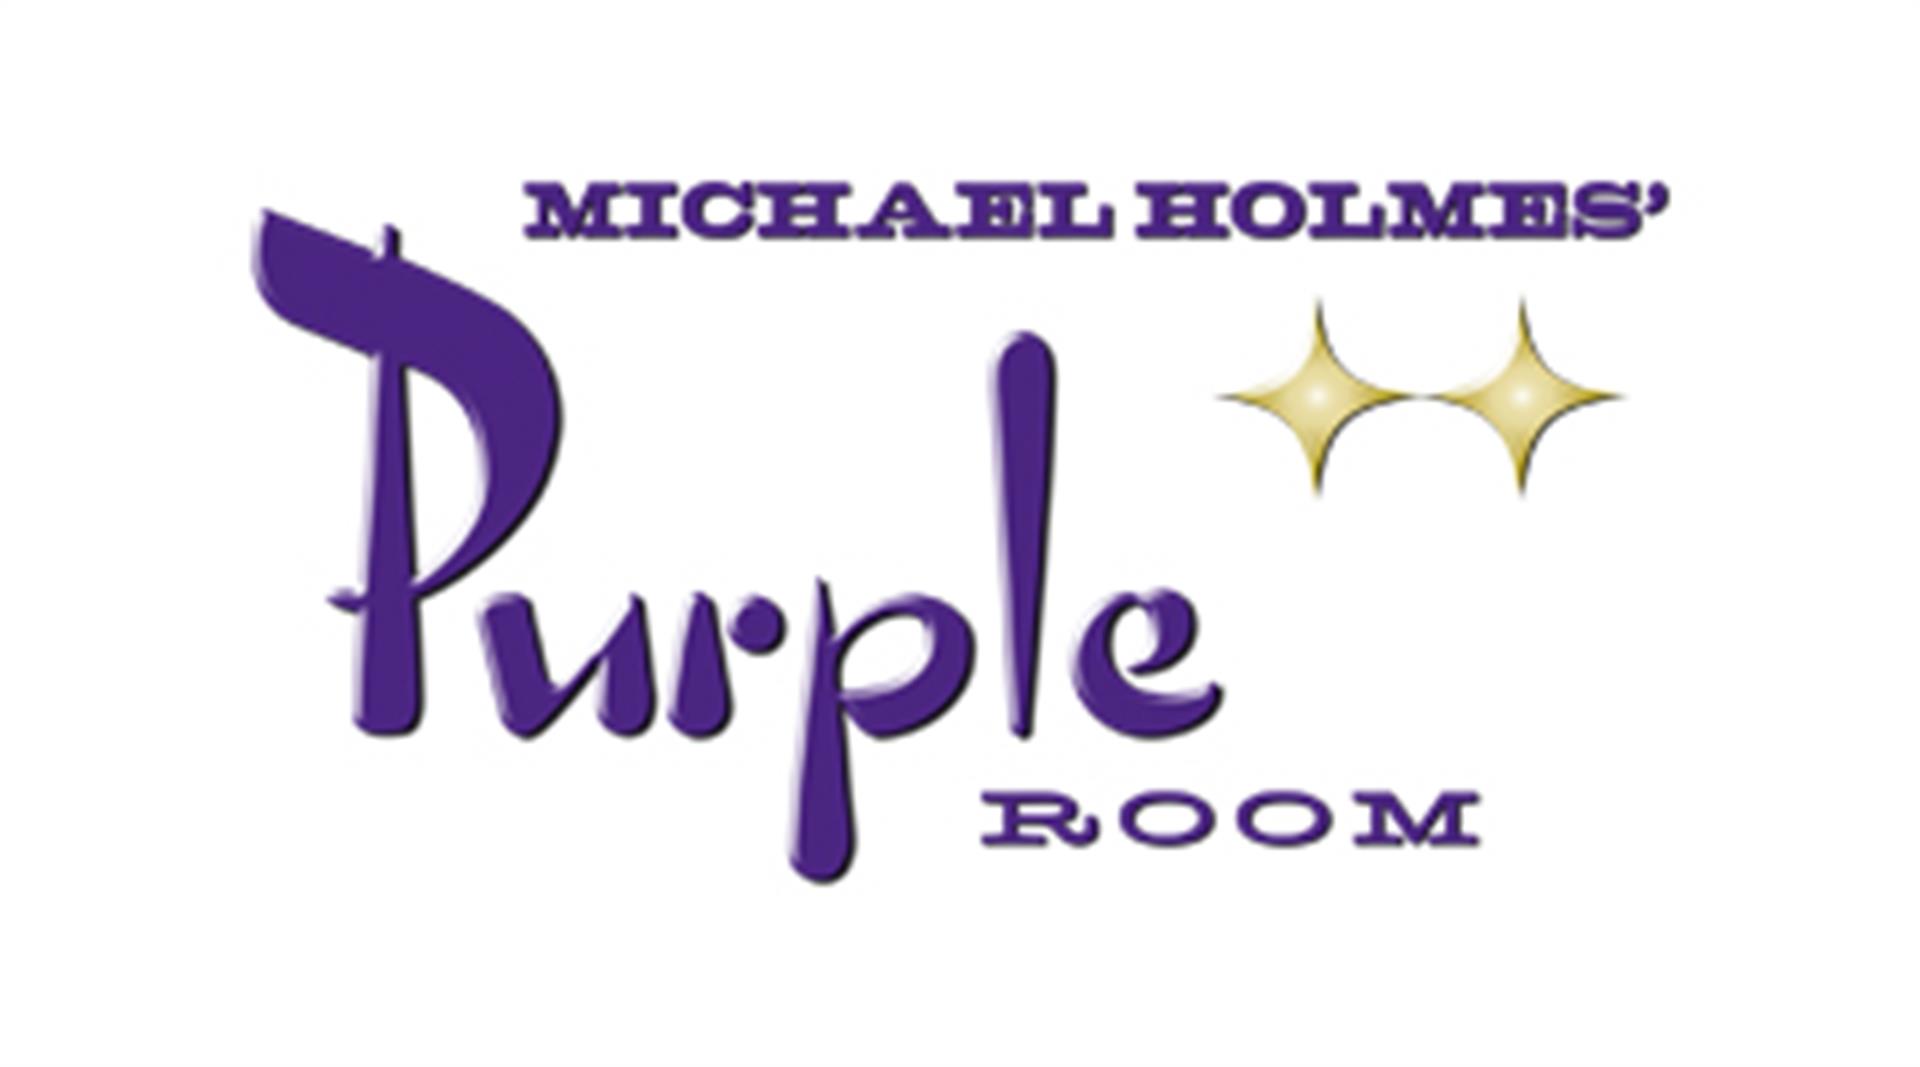 4C11B36D155D001007A4B1665CB0736Dpalm_springs_purple_room